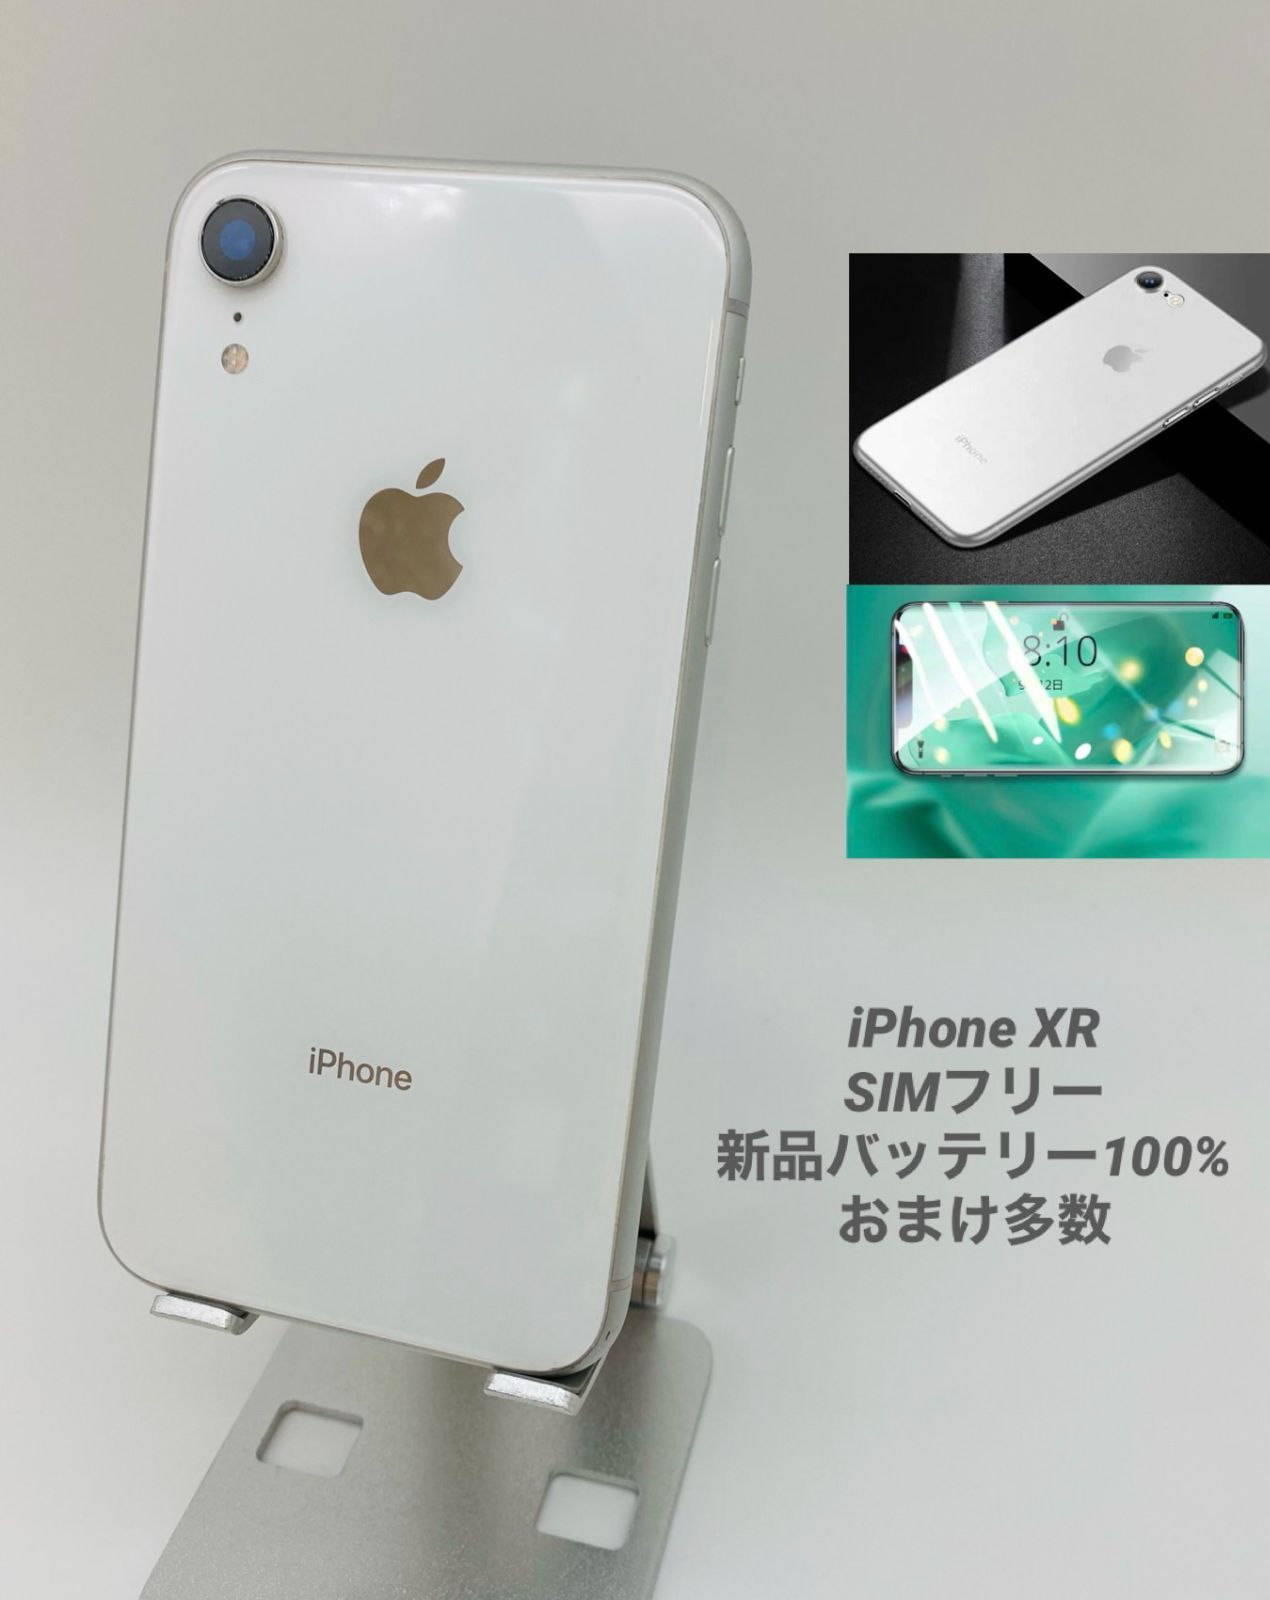 iPhoneXR 64GB ホワイト/新品バッテリー100%/シムフリー/おまけ多数 XR-008 - メルカリ